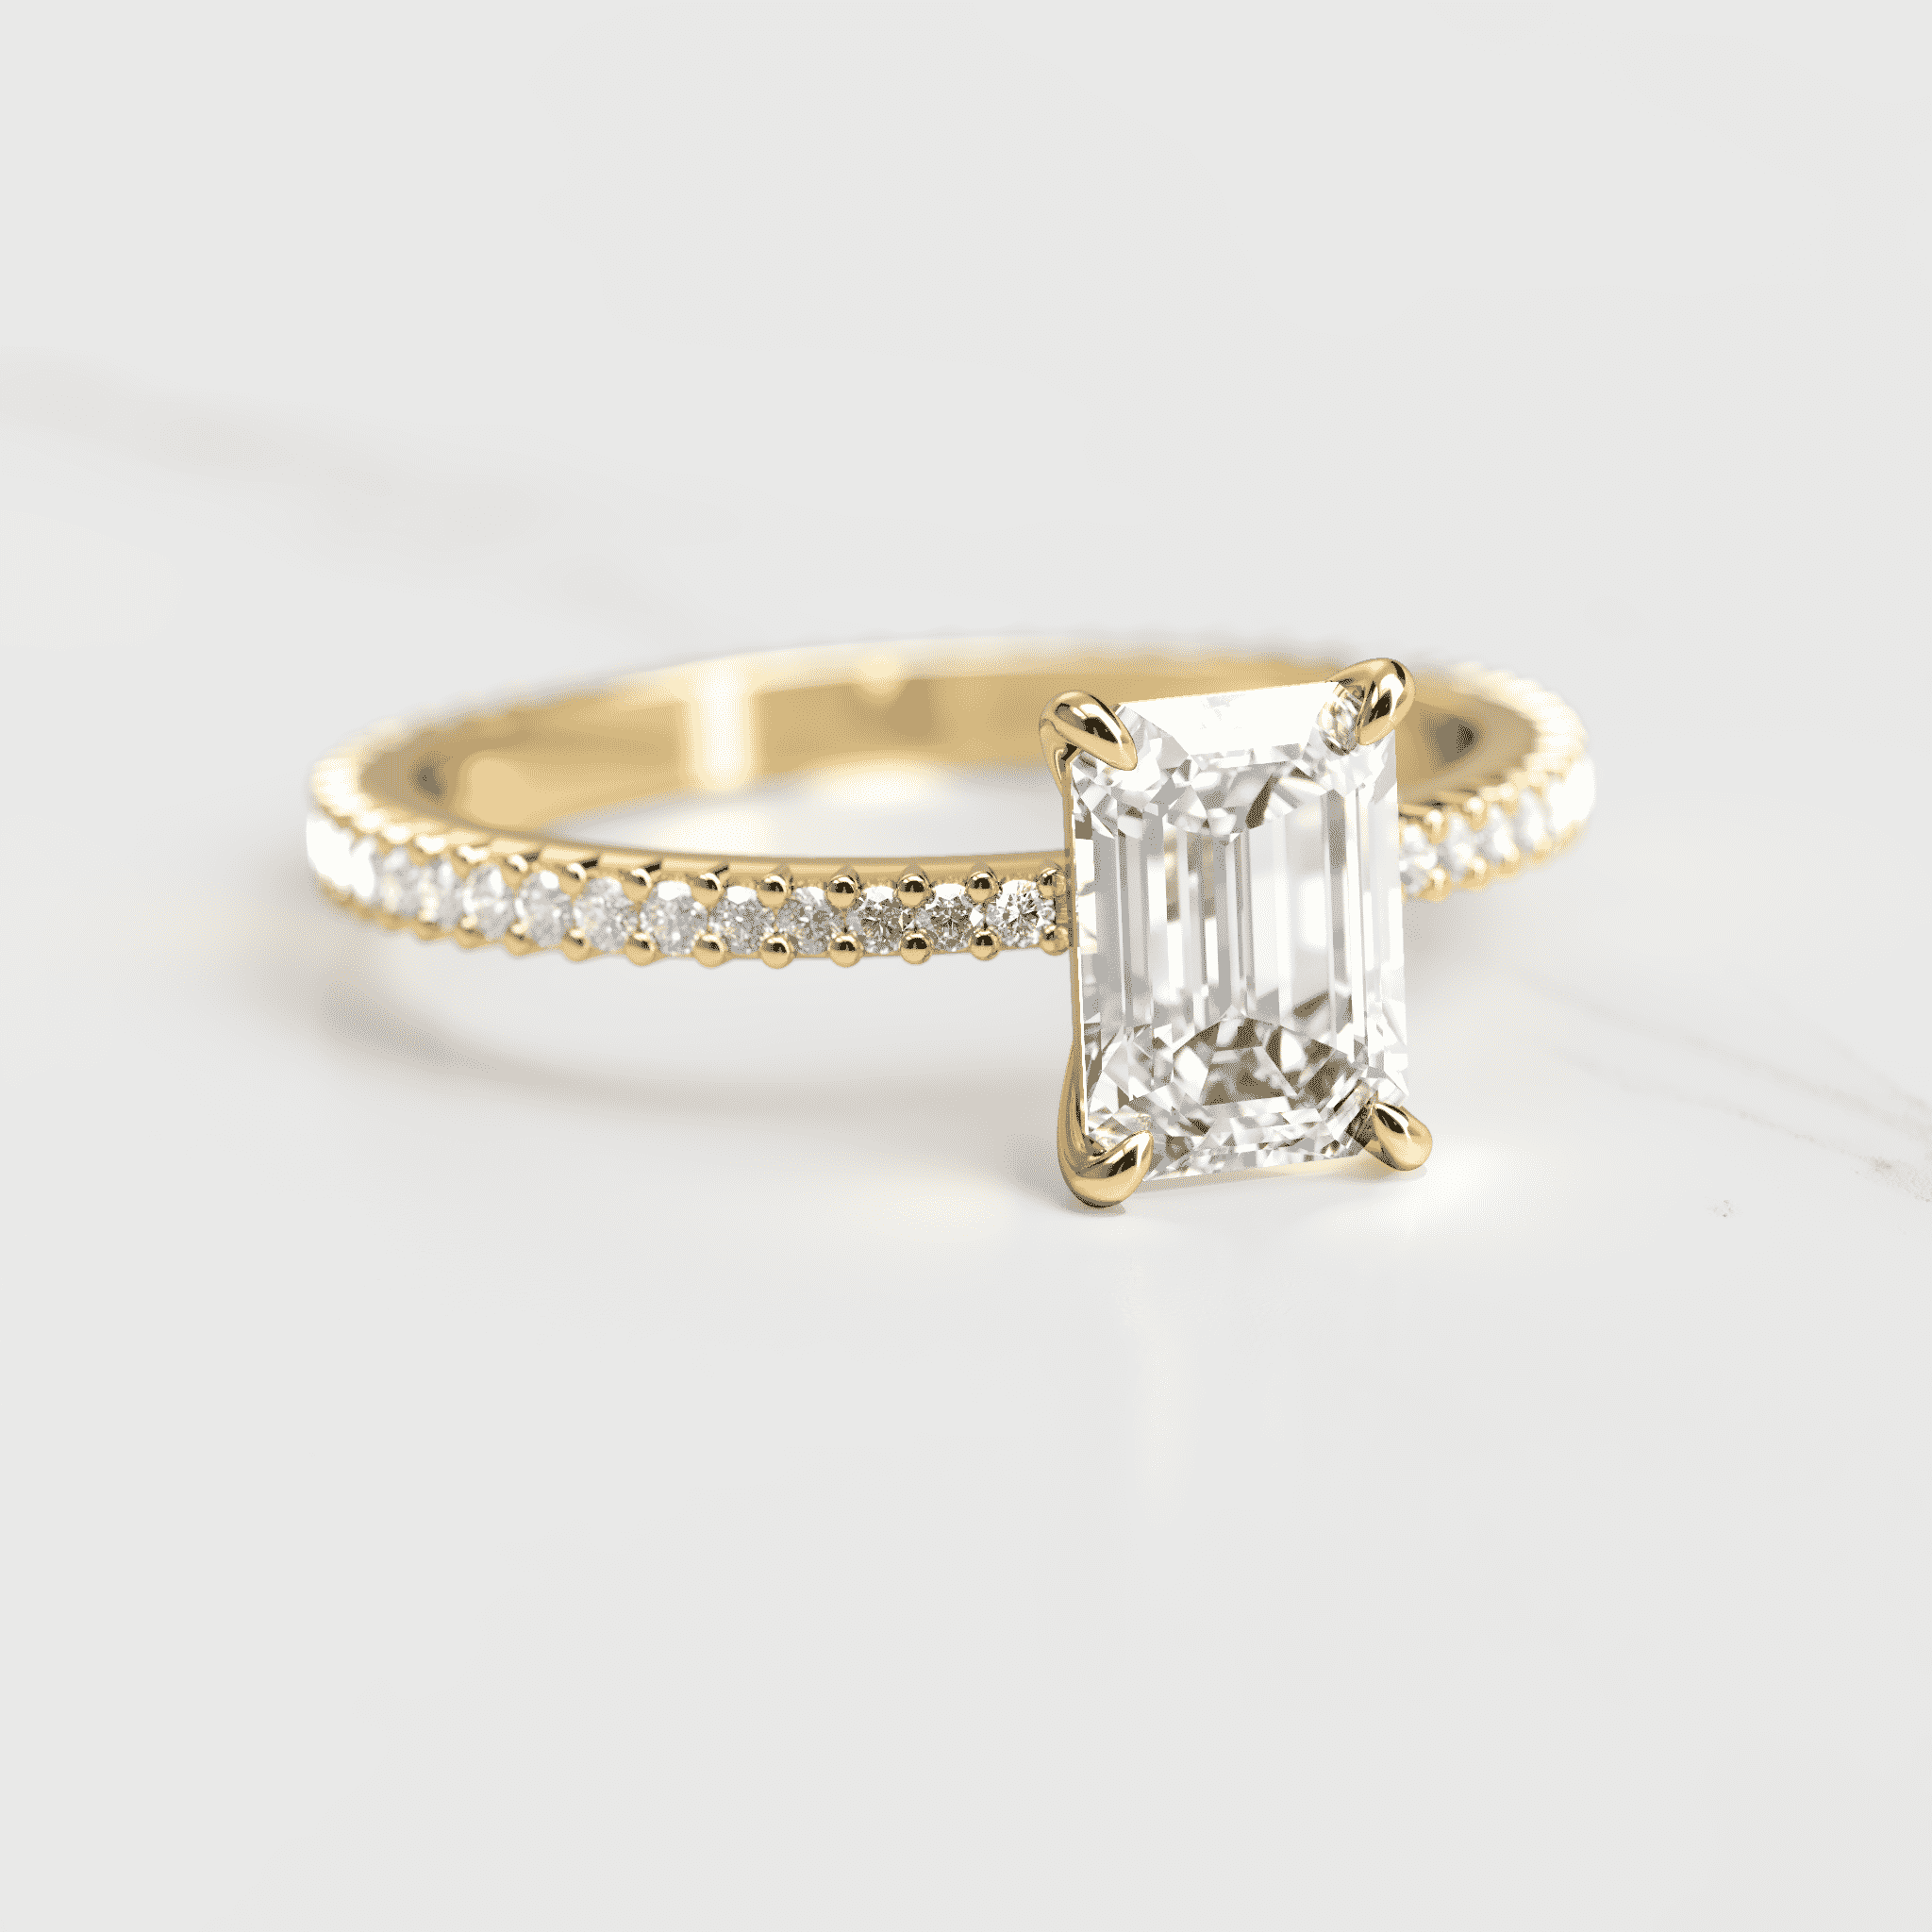 EMERALD FULL PAVE TAPERED DIAMOND RING - 14k white gold / 0.75ct / natural diamond